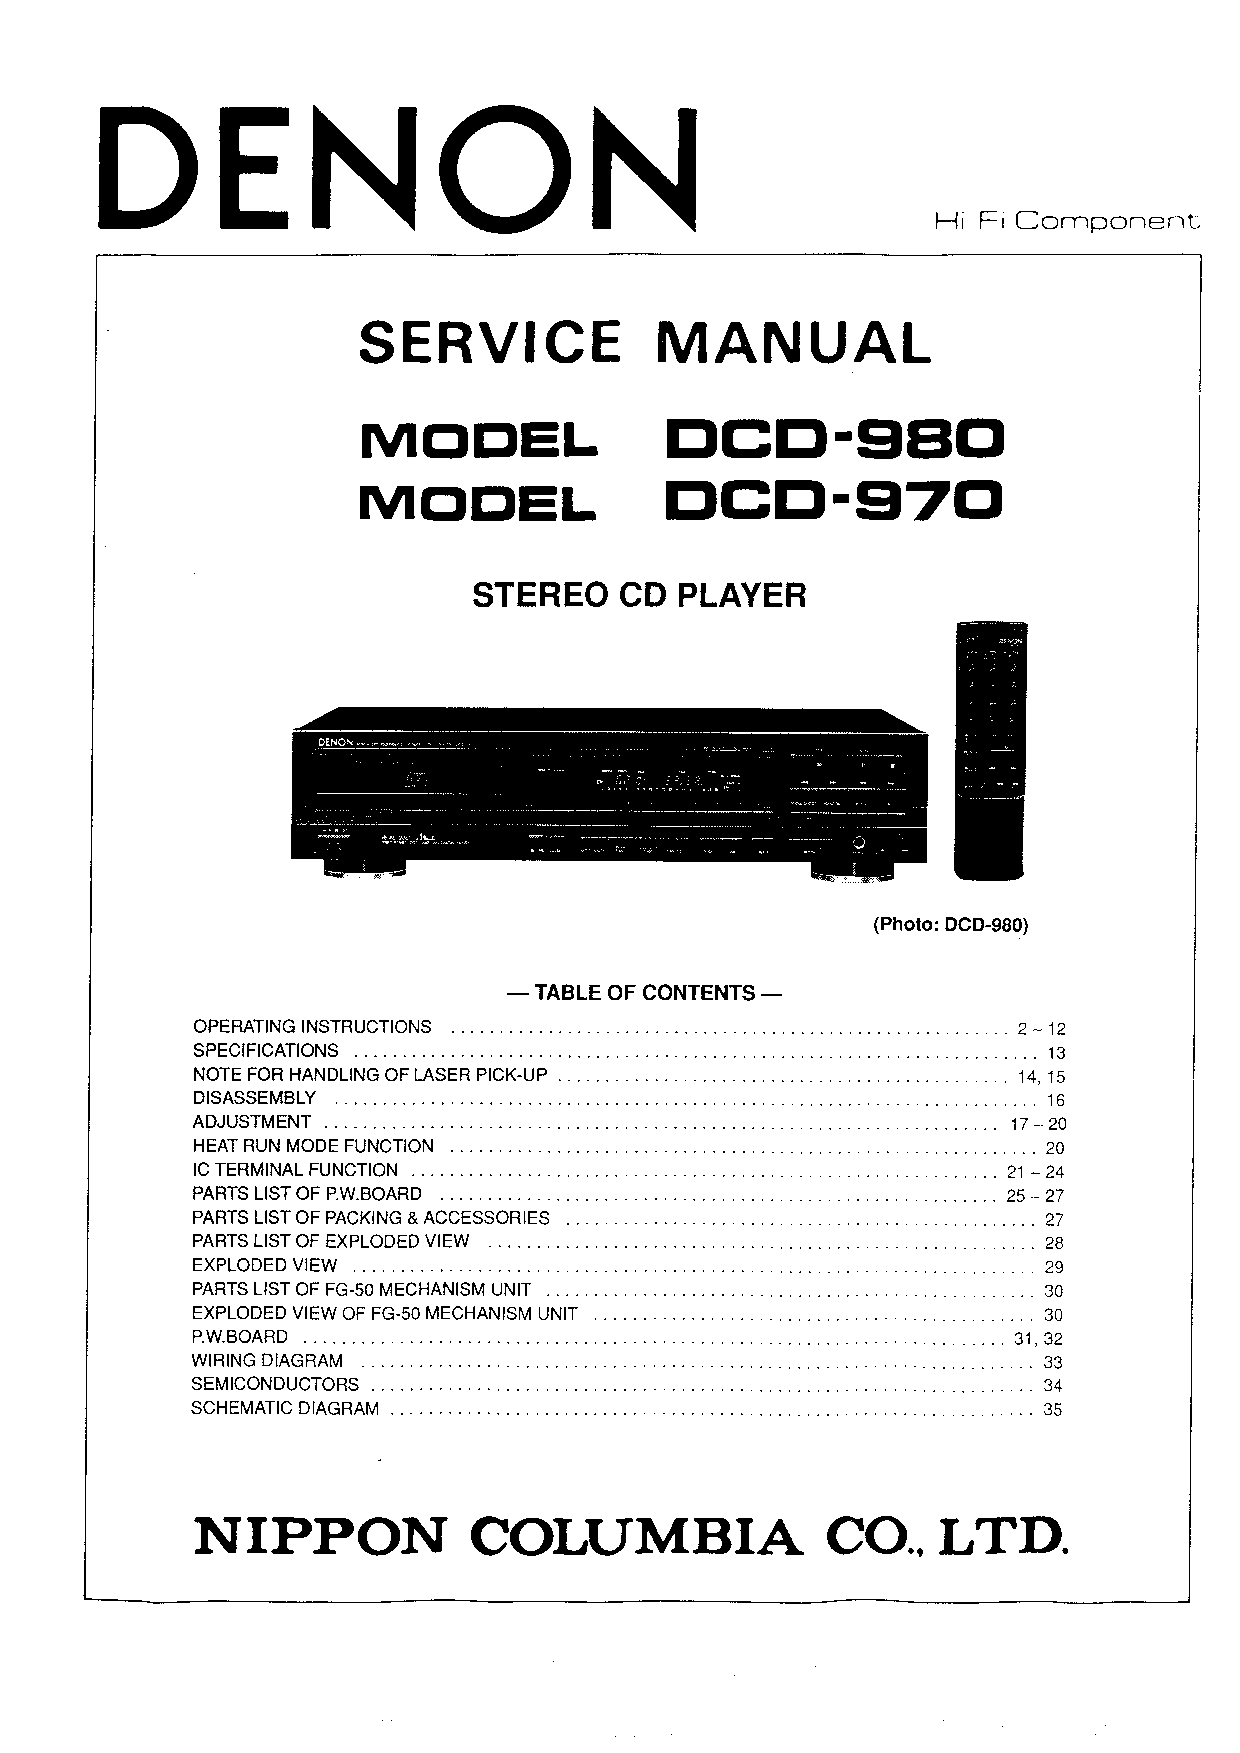 Denon DCD-970, DCD-980 Service Manual